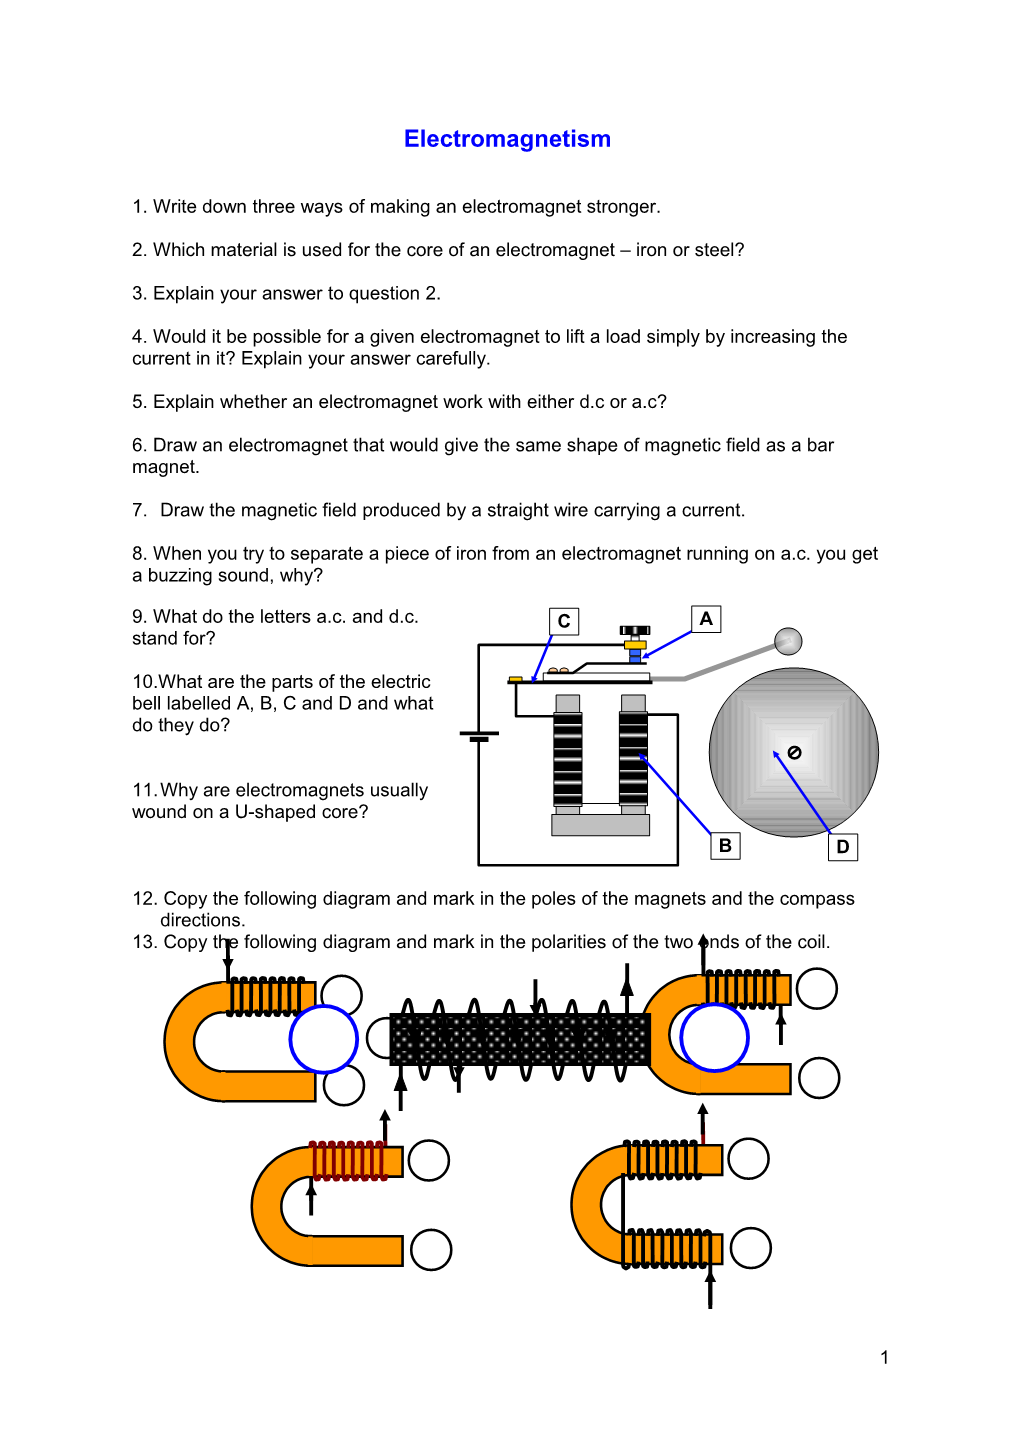 1. Write Down Three Ways of Making an Electromagnet Stronger